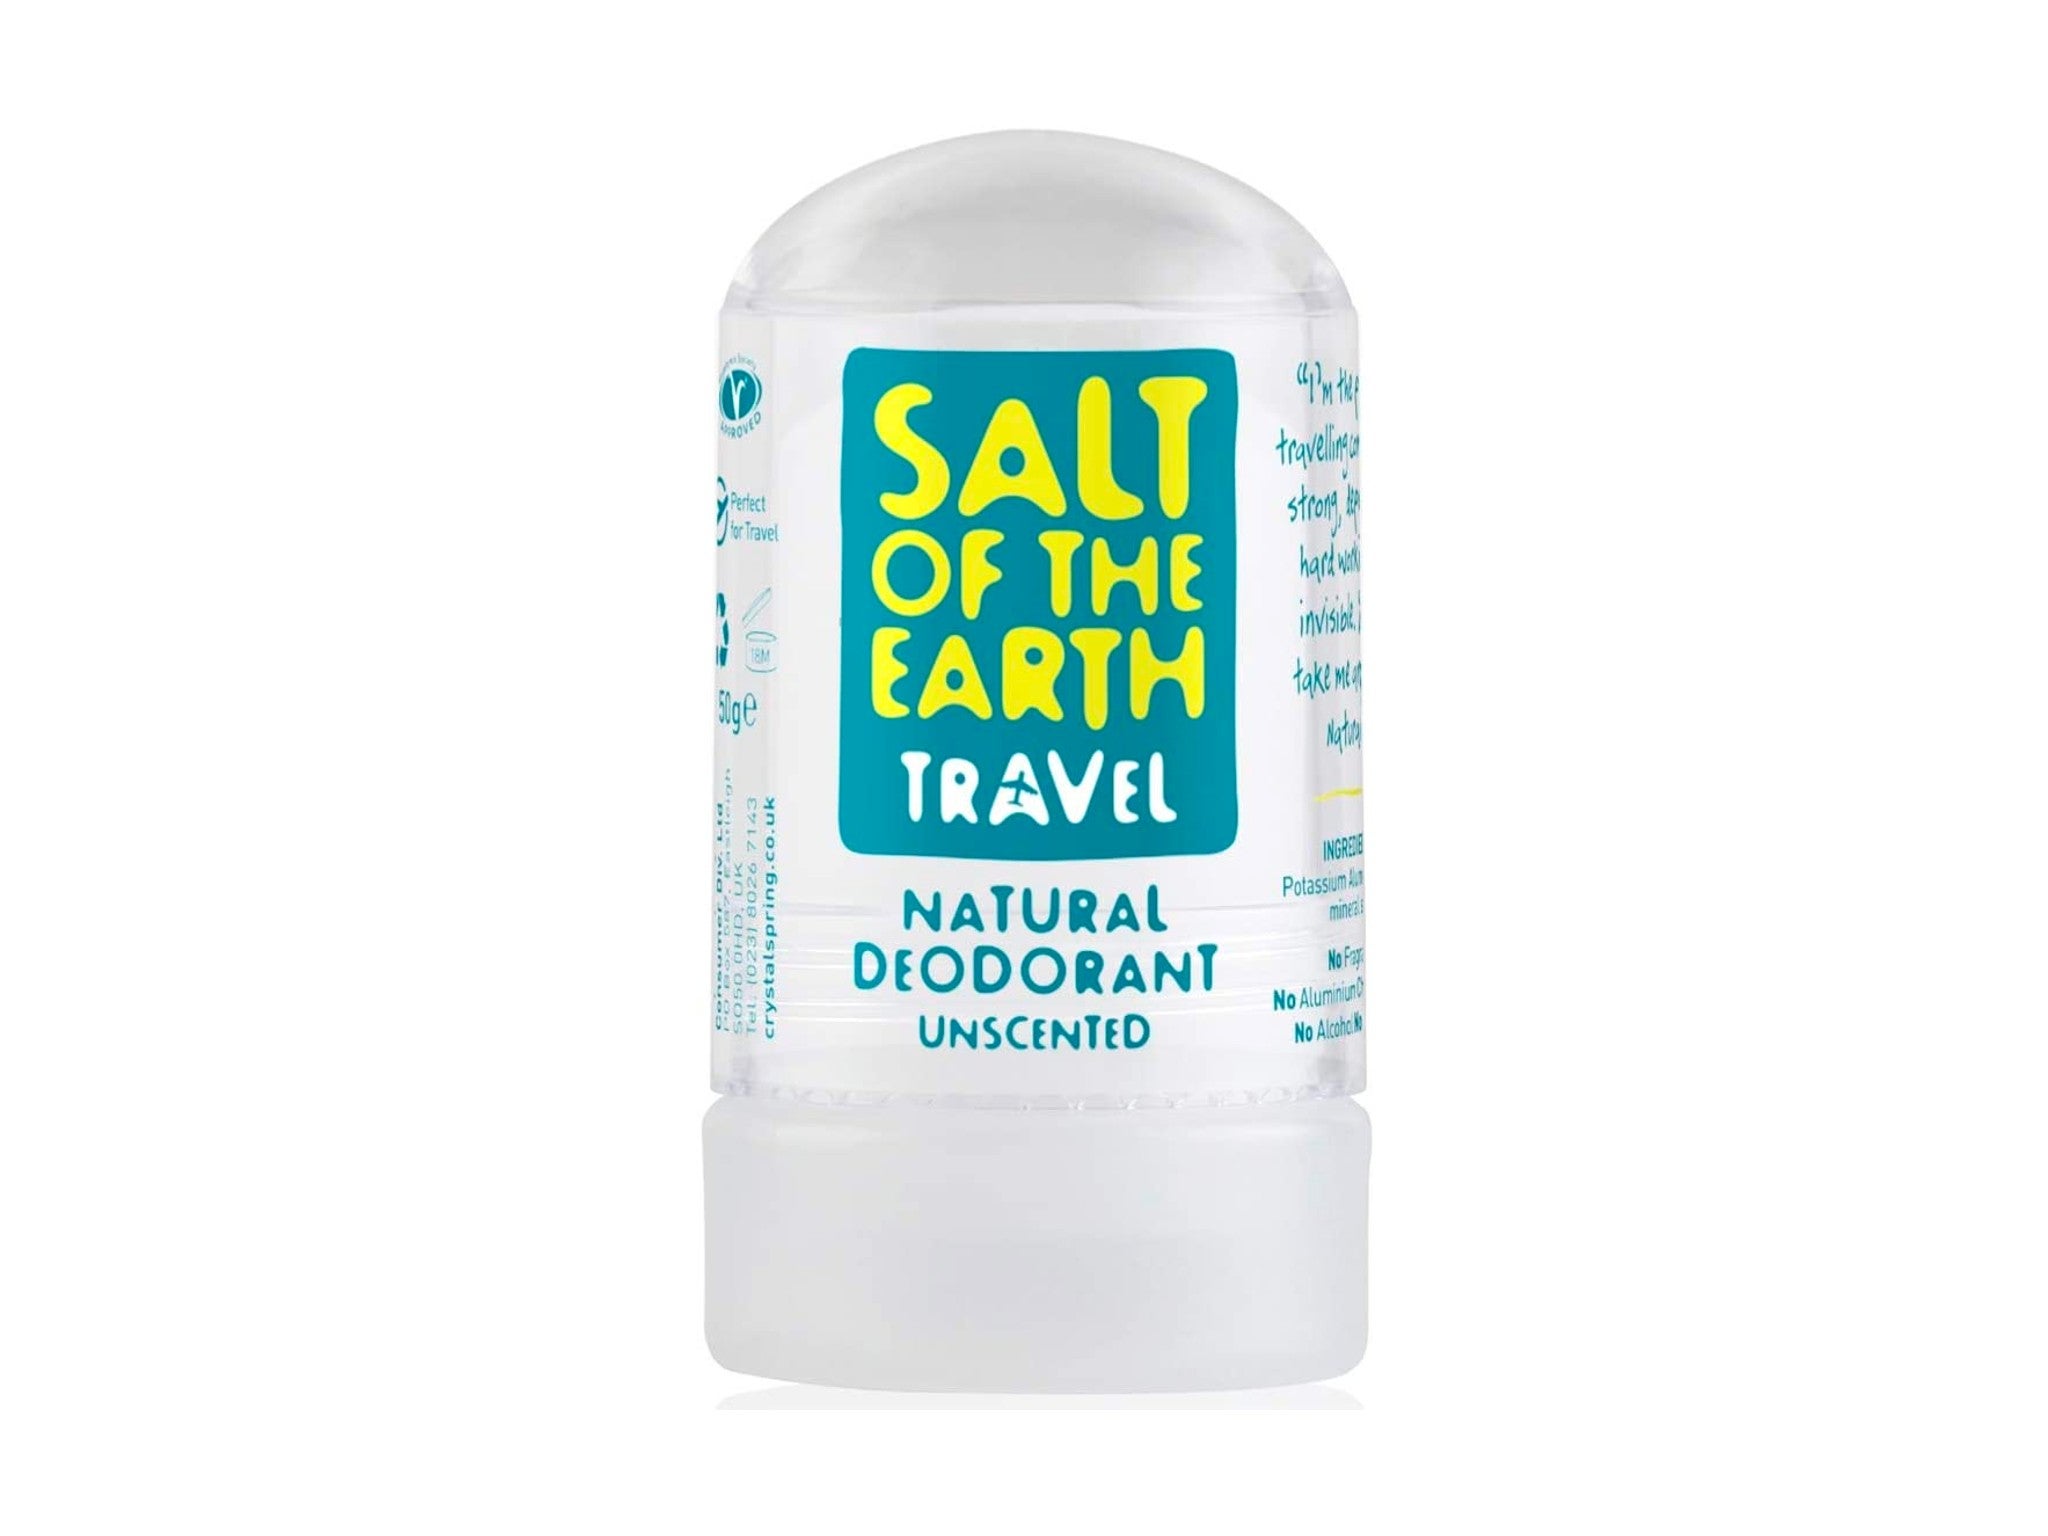 Salt of the Earth travel deodorant indybest.jpg